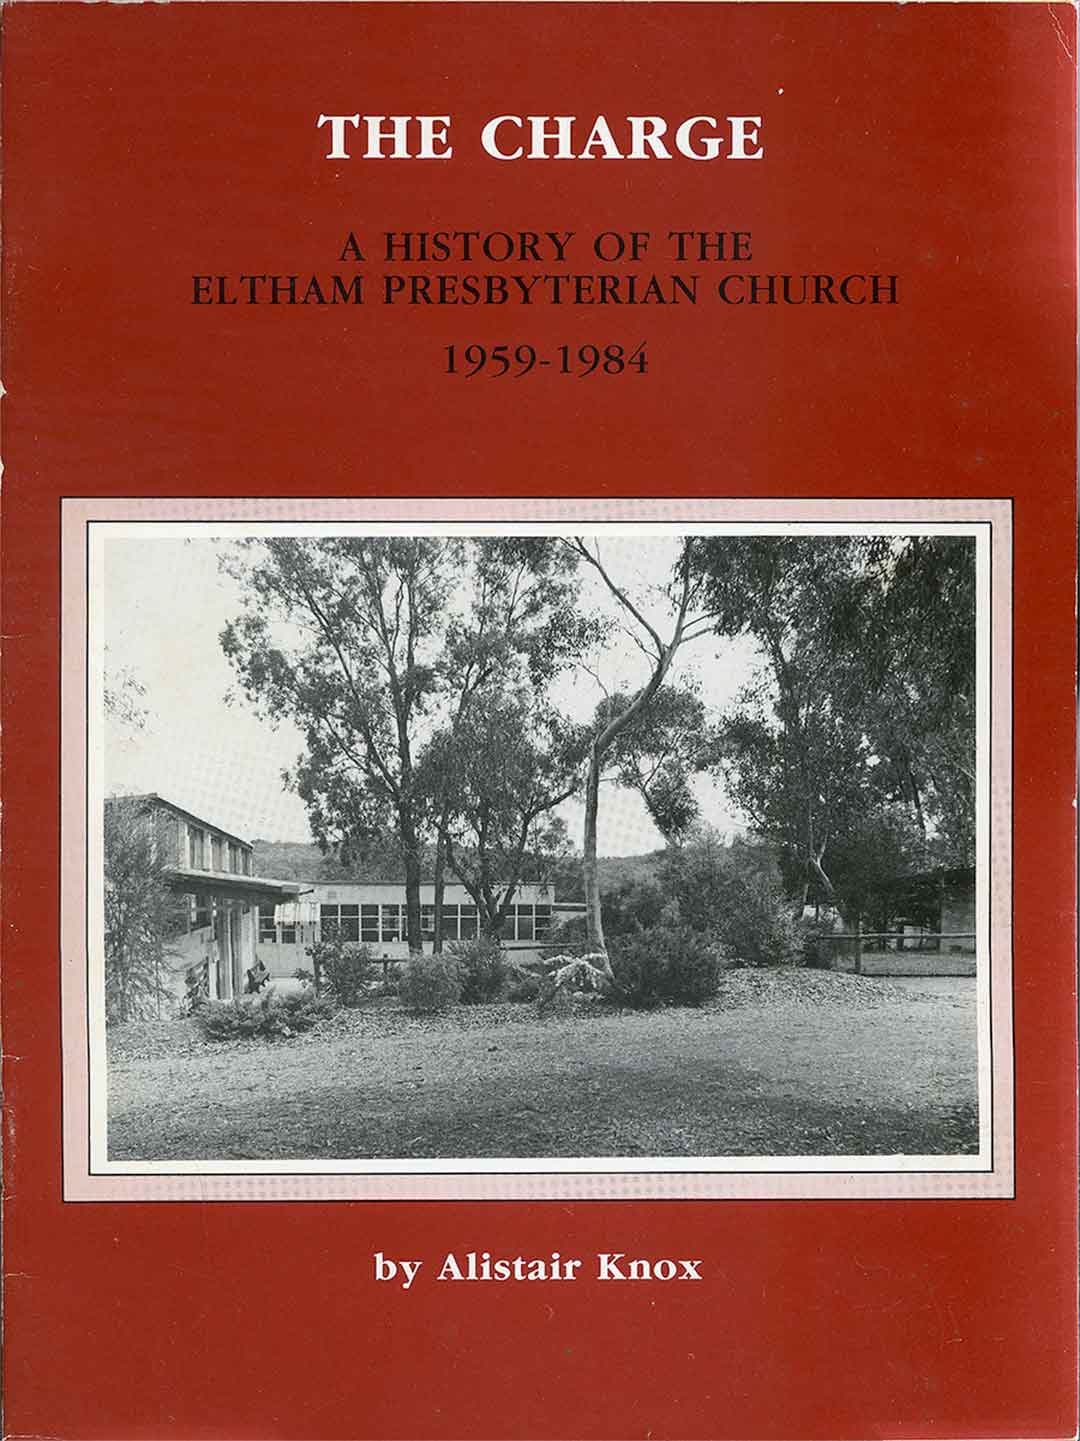 Cover ,History of the Eltham Presbyterian Church